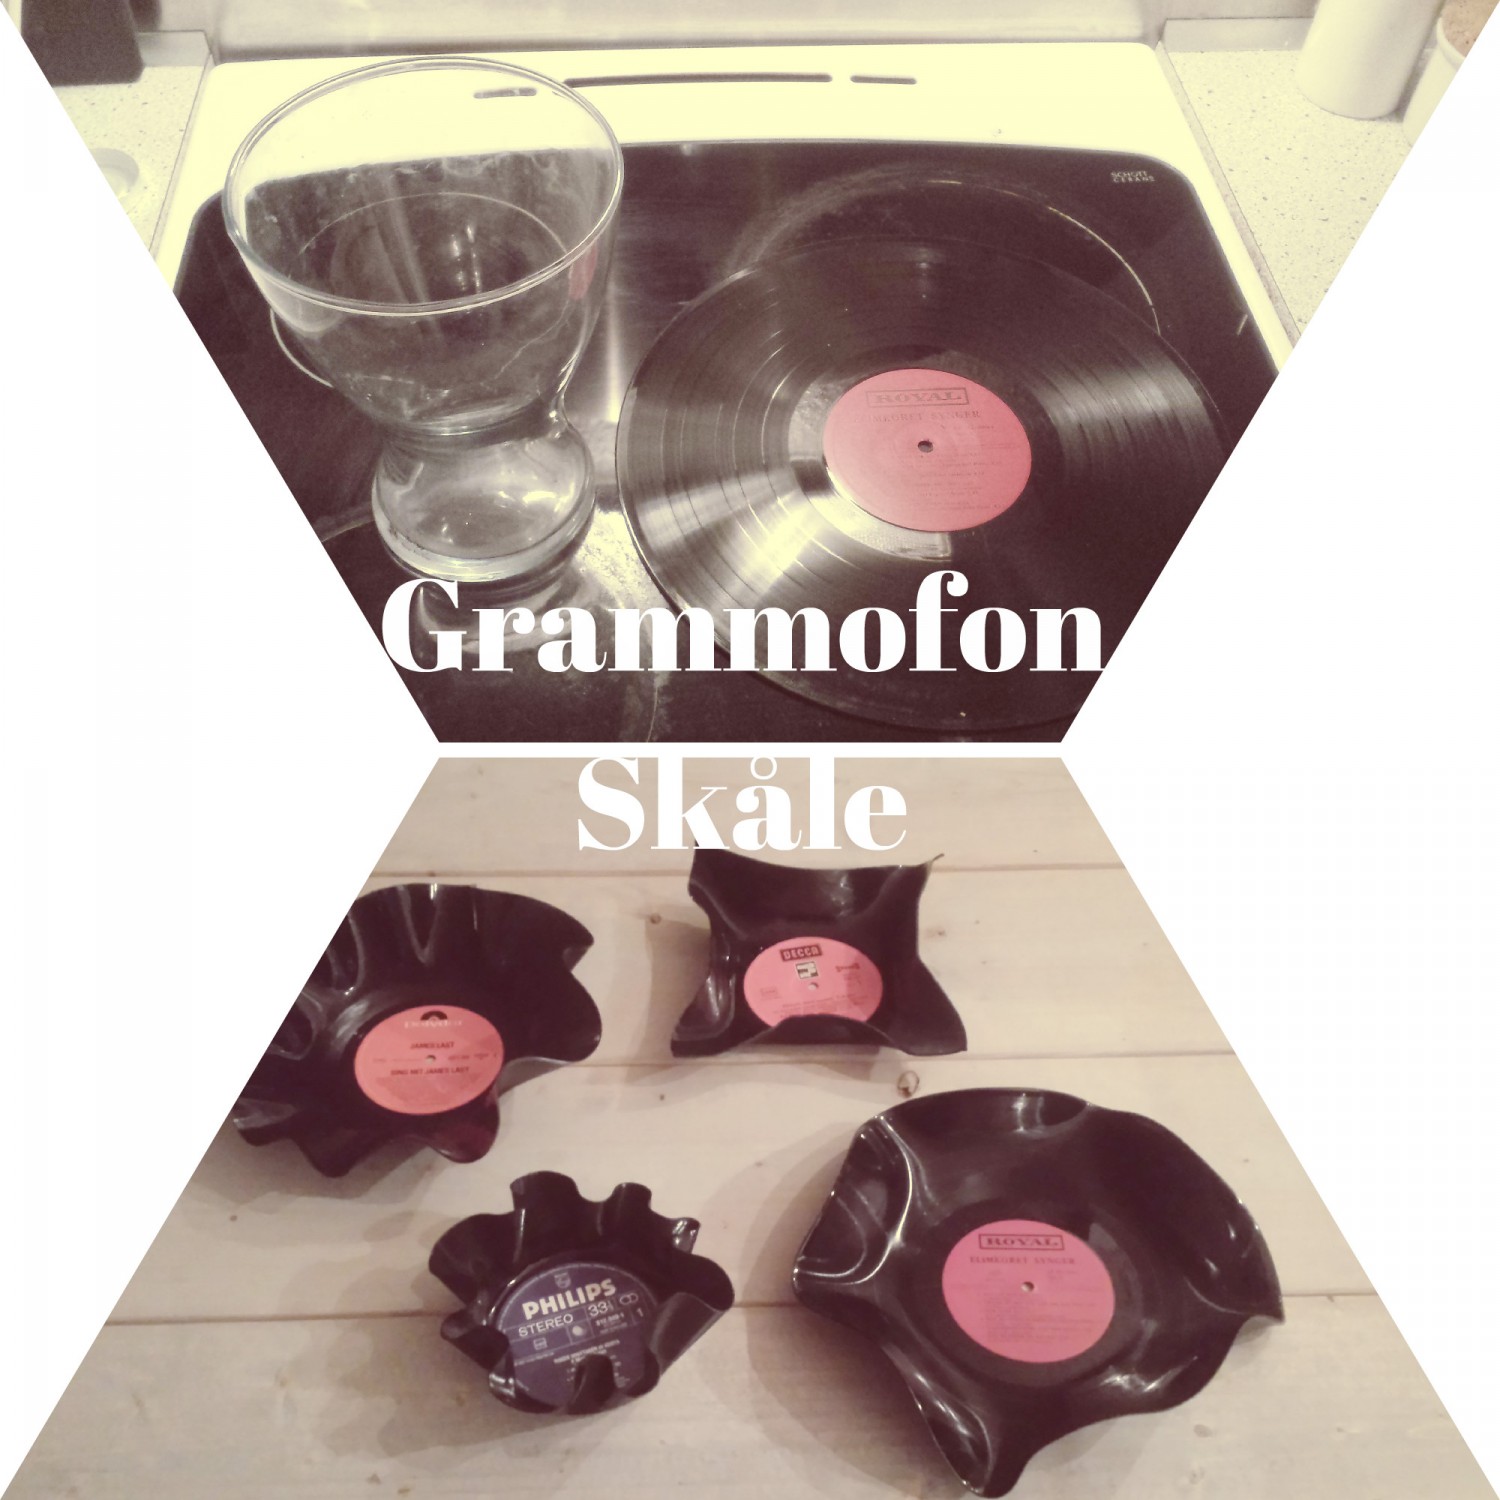 Grammofon skåle | schwandt